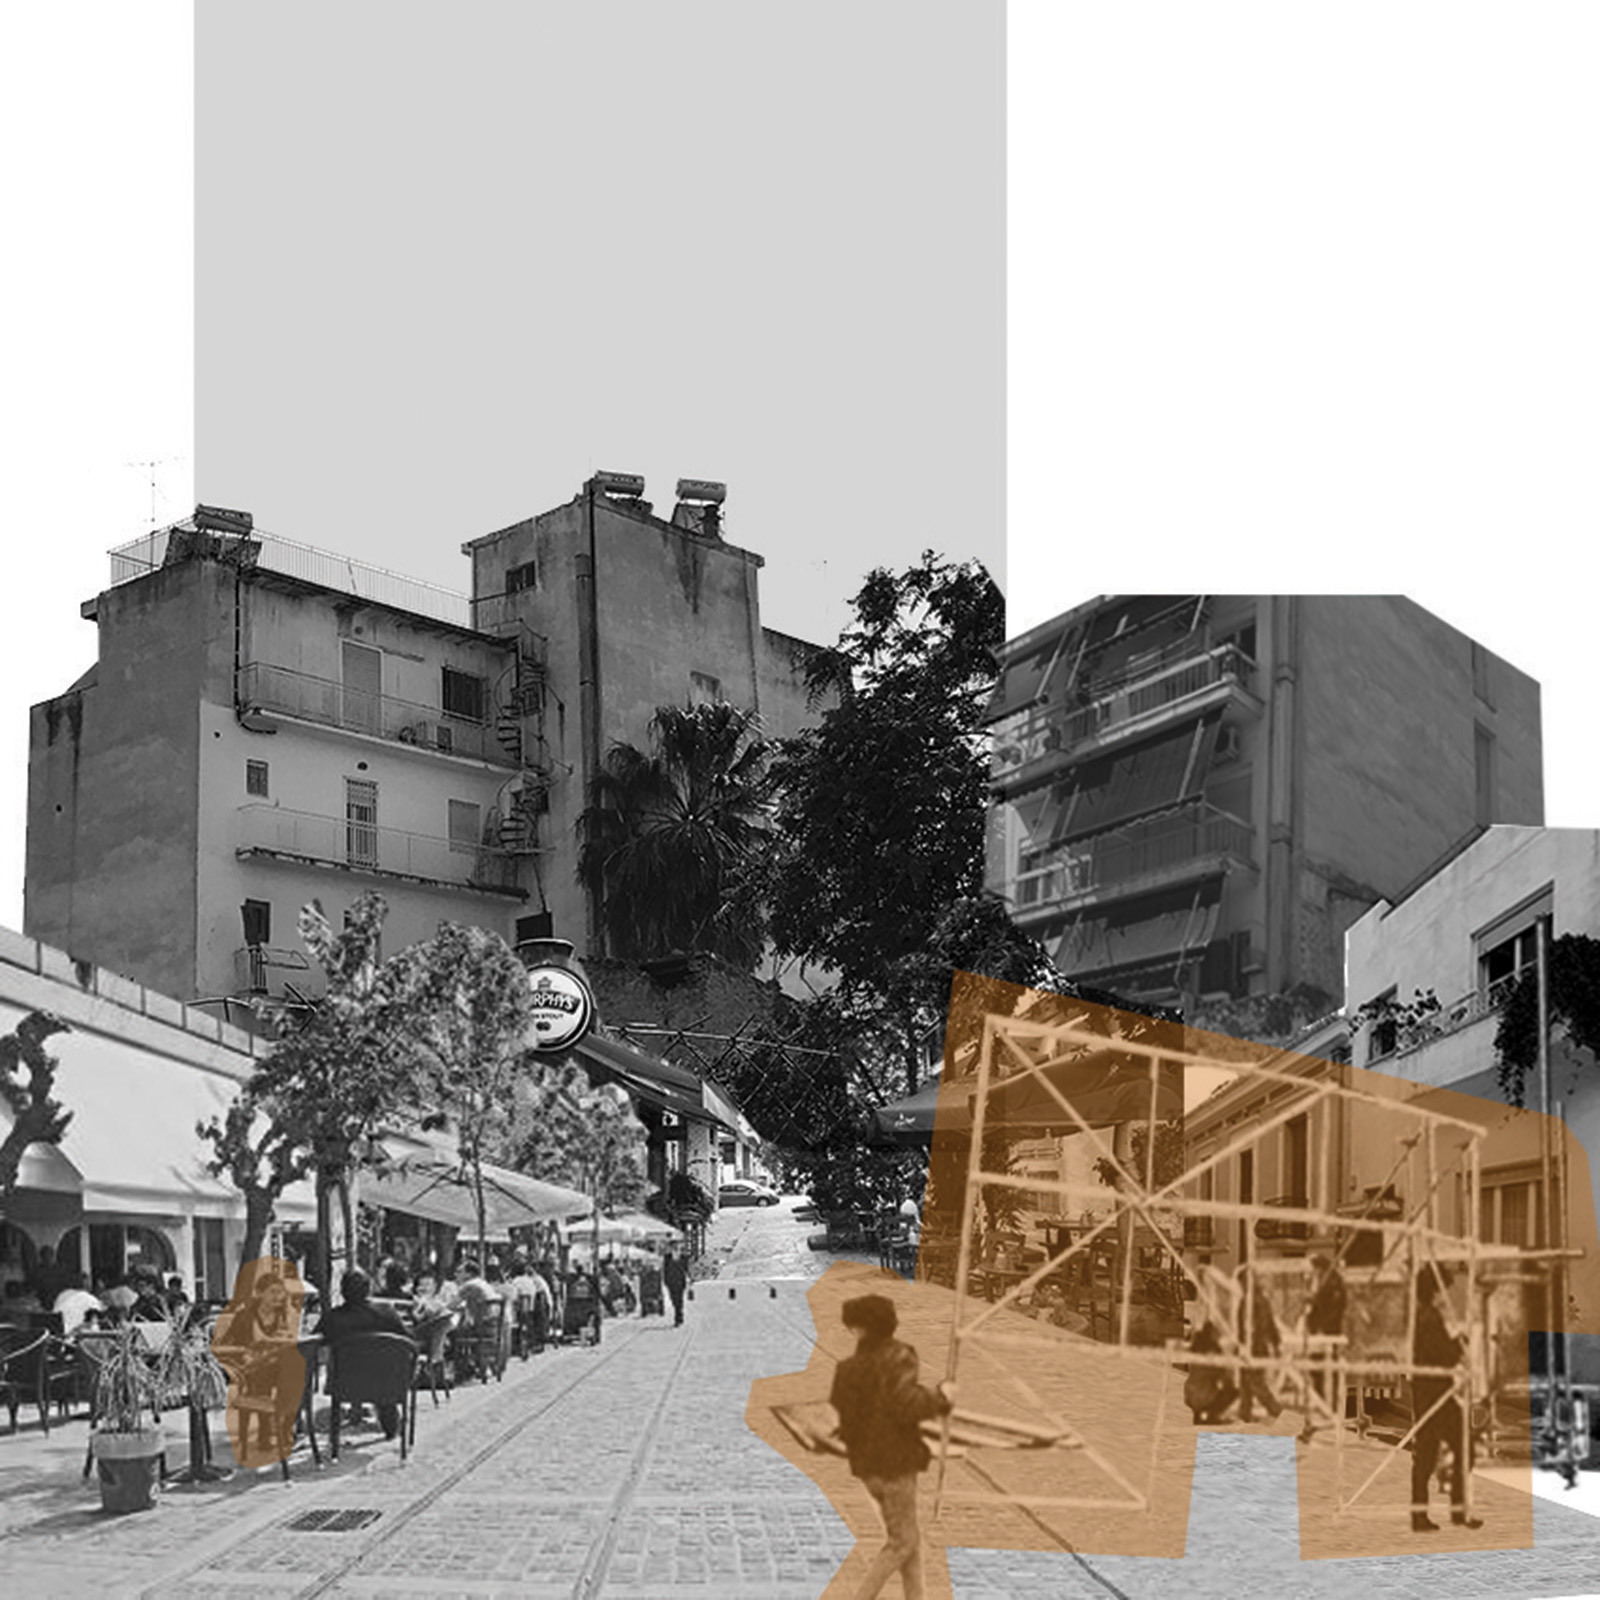 Archisearch Cooperative Construction Centre in Metaxourgeio, Athens | Diploma thesis project by Athina Maria Georgiadi, Thalassini Karali & Ourania Agoranou